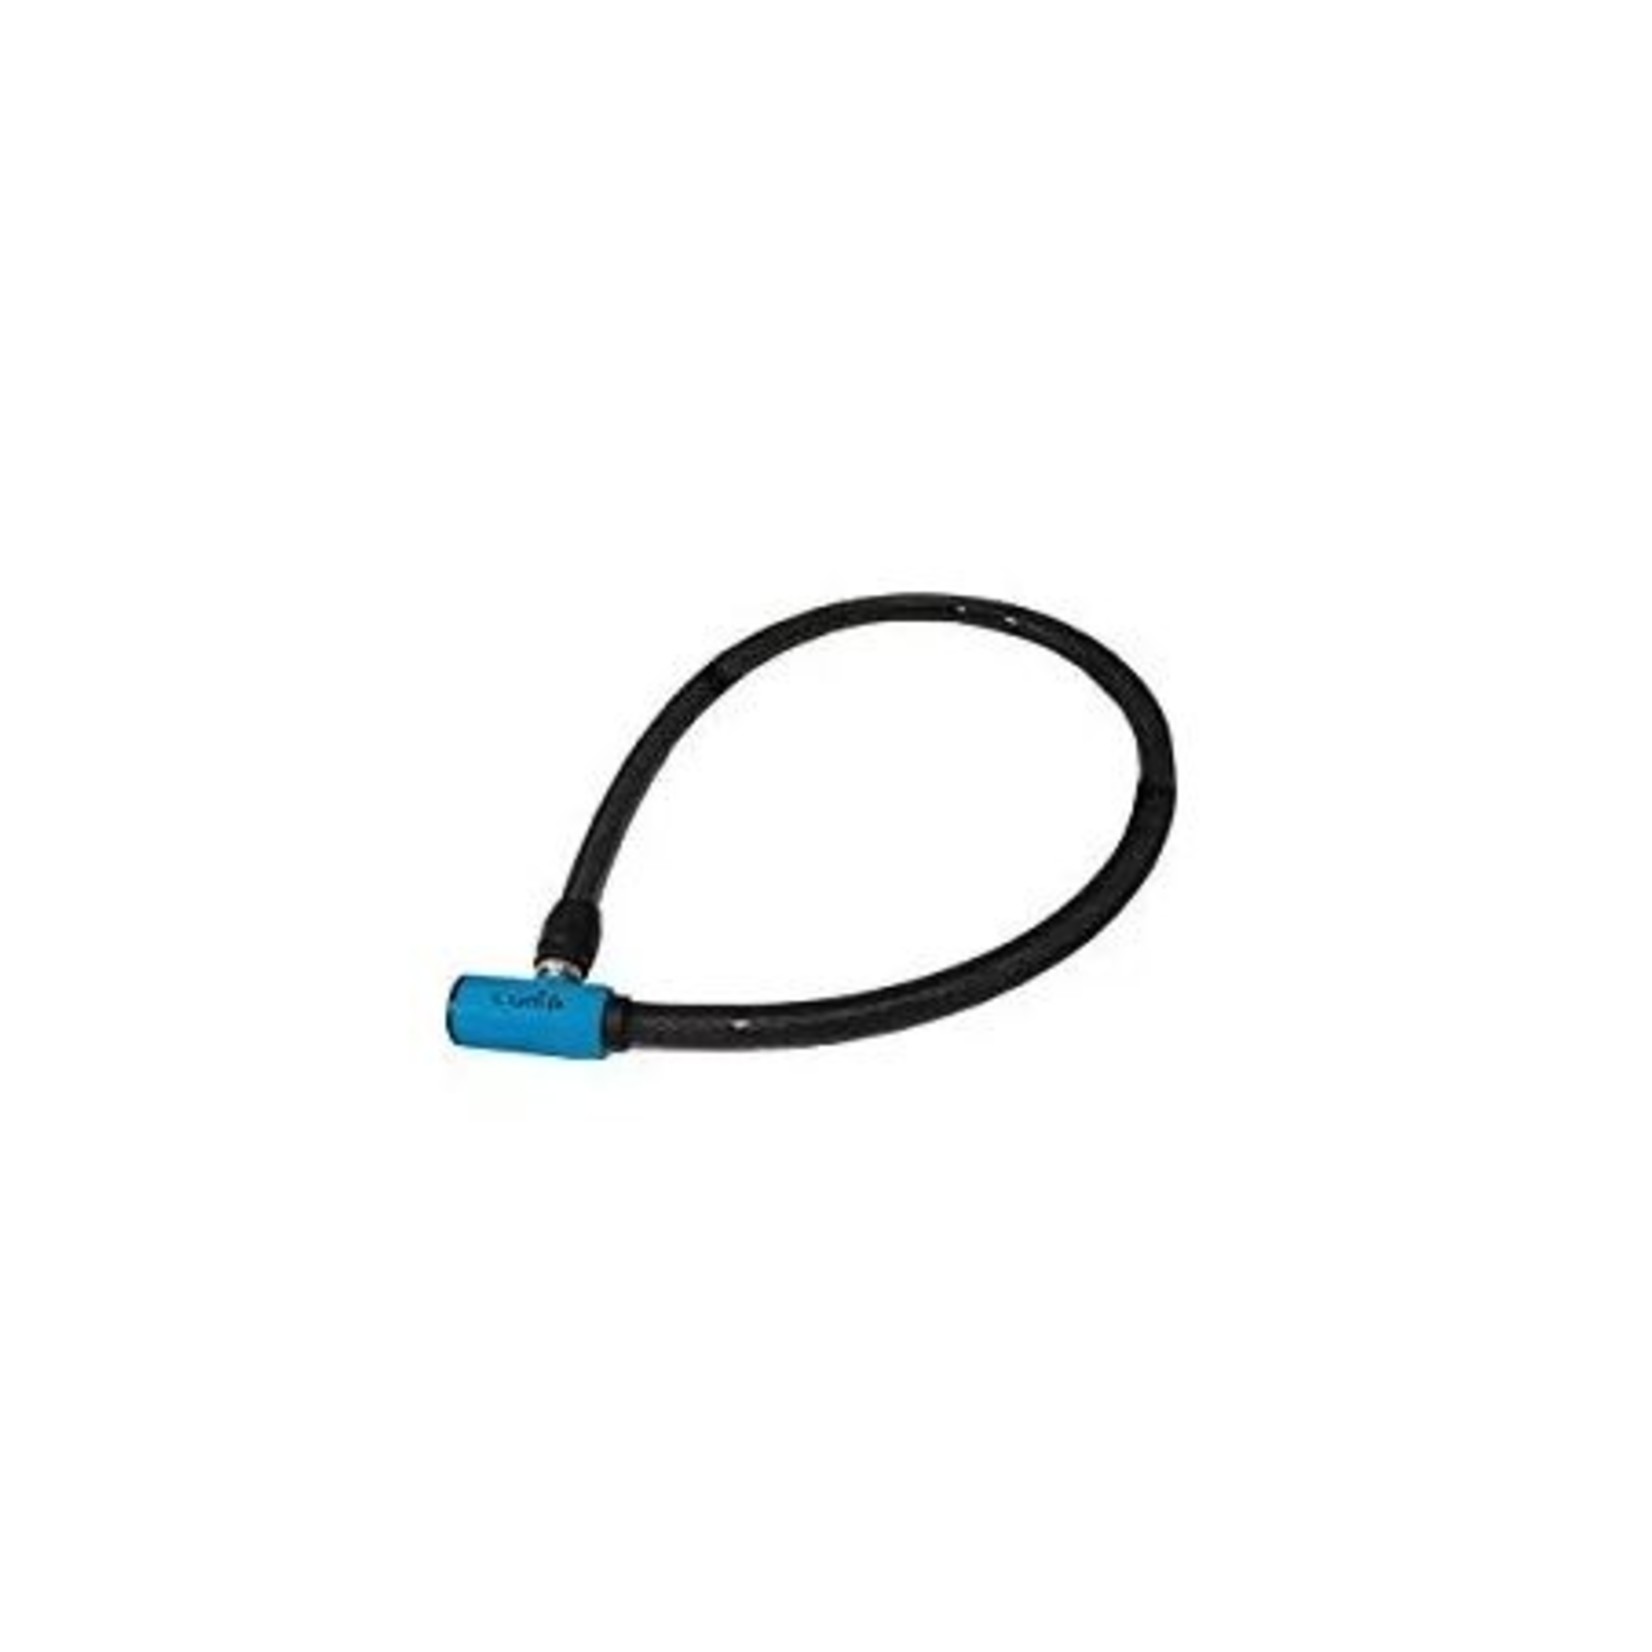 Luma Luma Bike/Cycling Lock - Cable Lock - 20mm X 1000mm - Keyed Lock With Blue